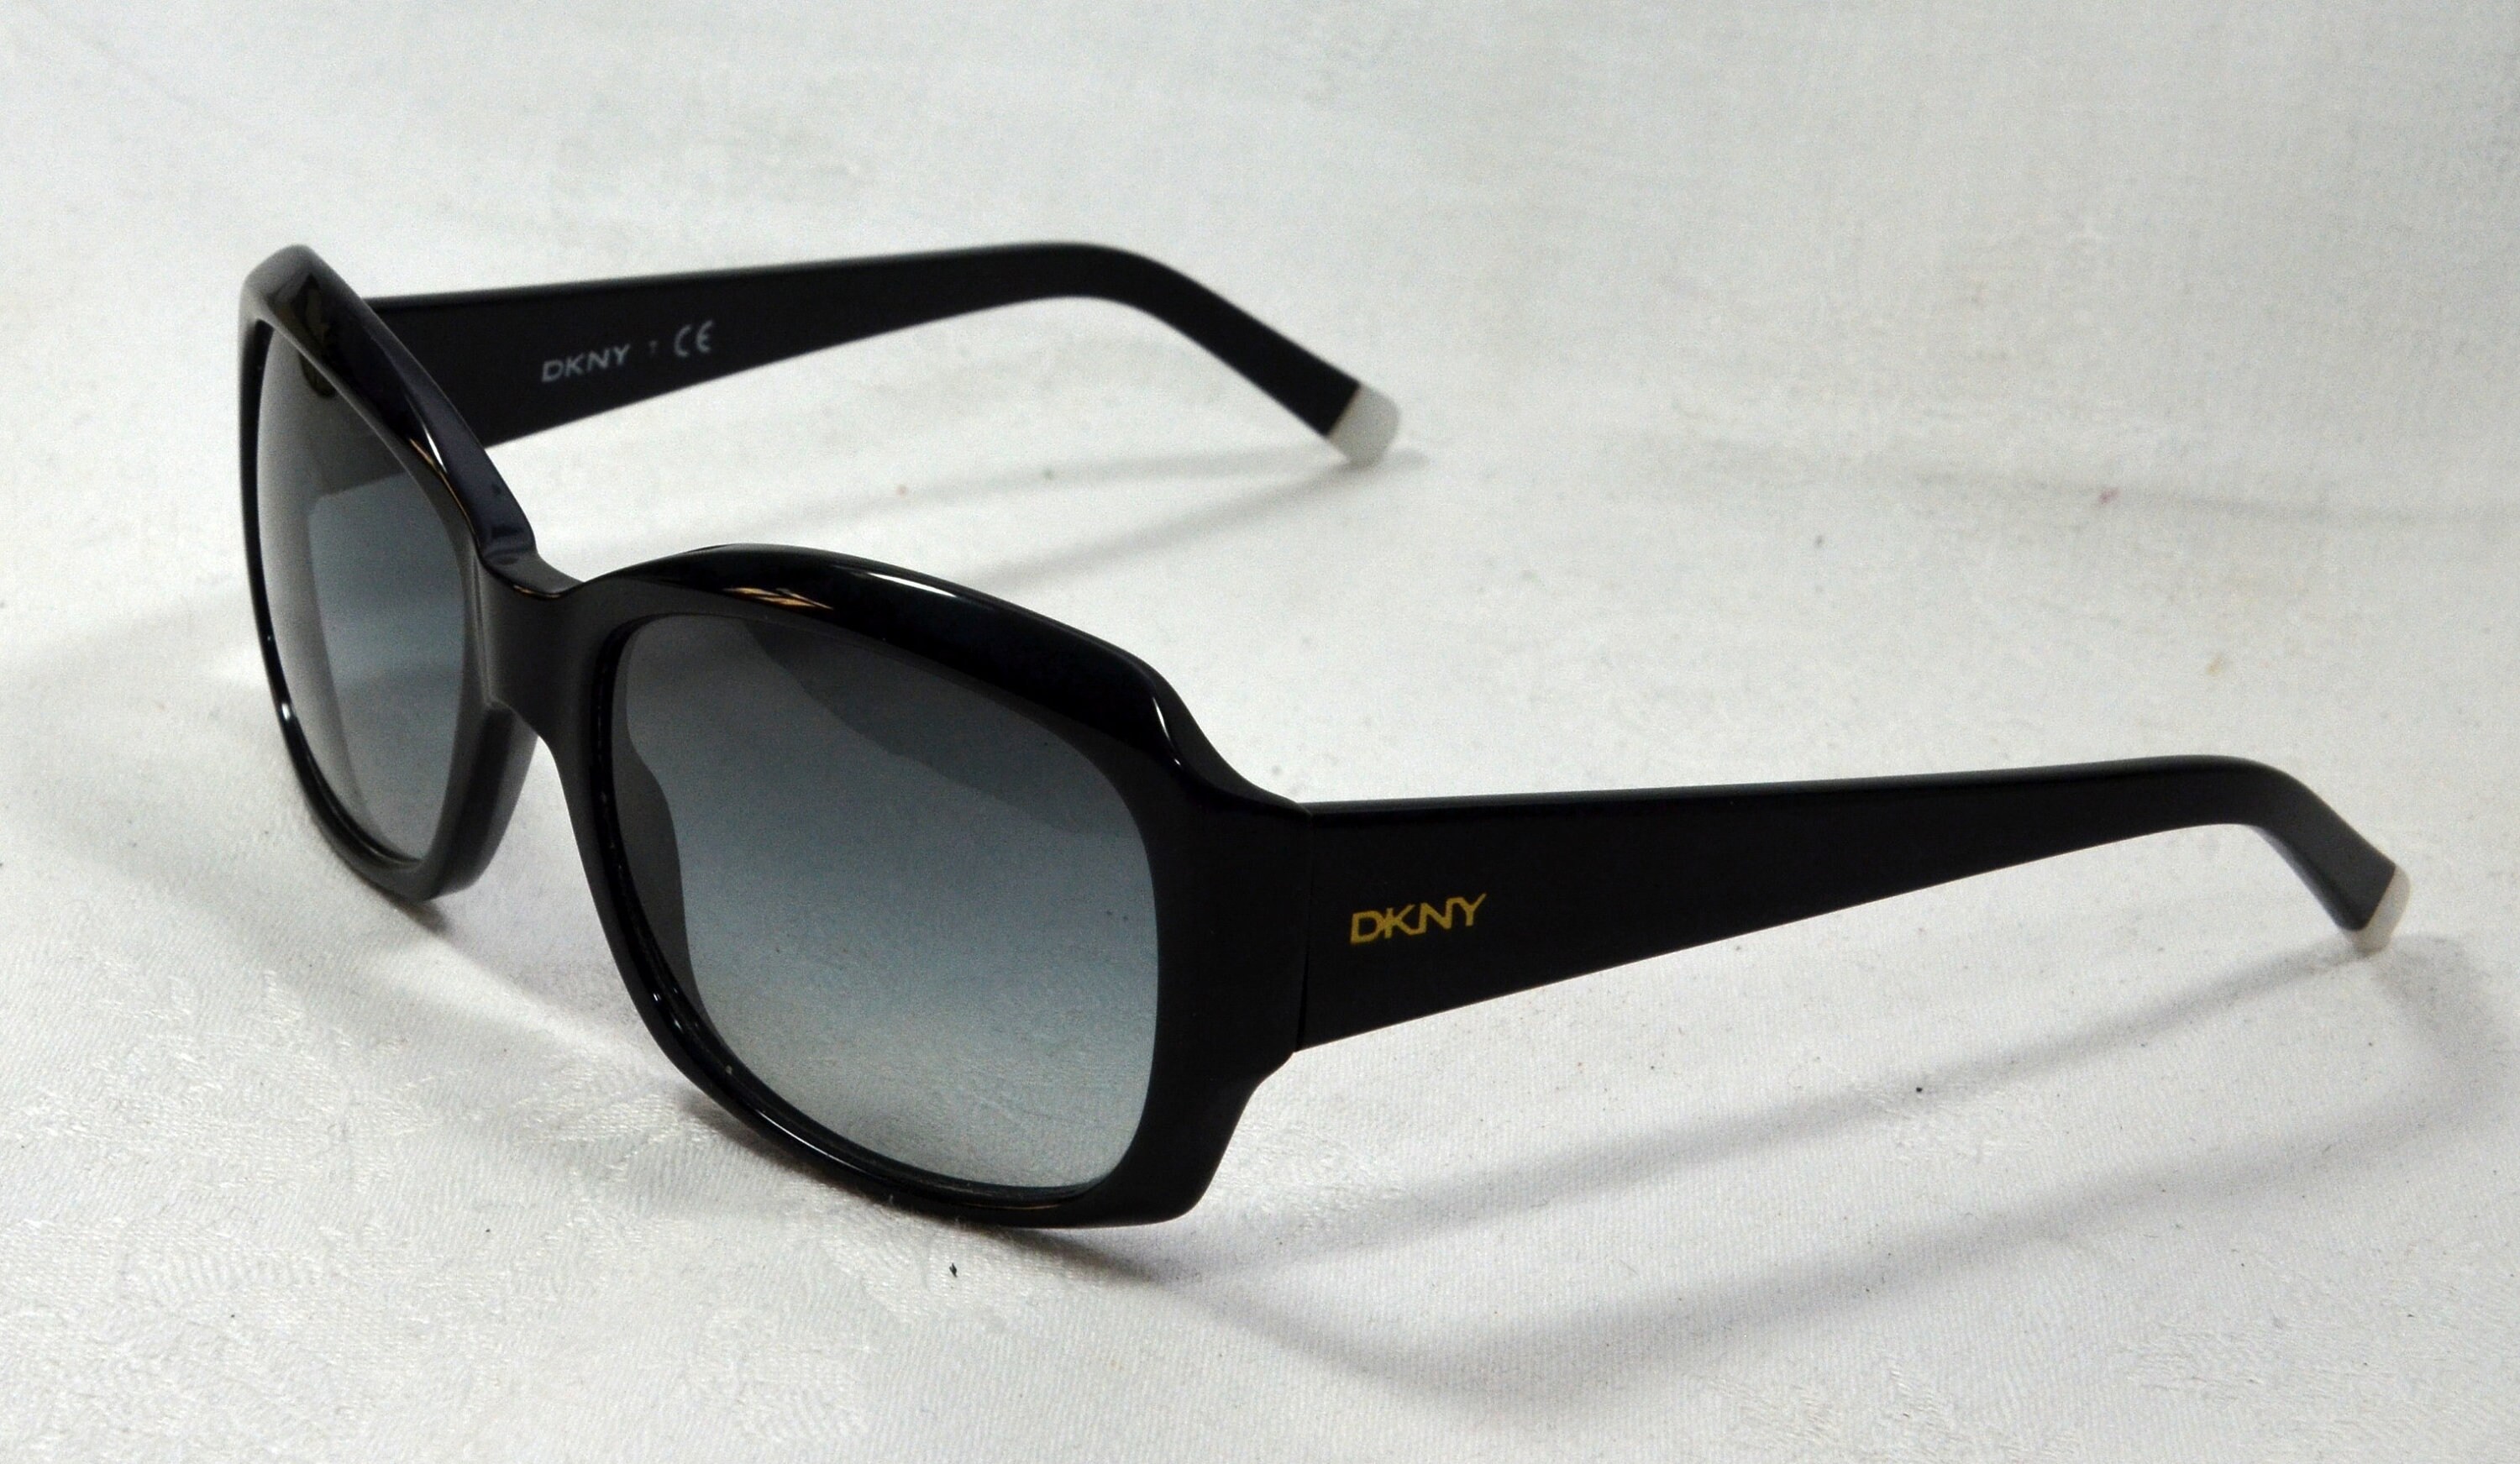 DKNY by Donna Karan New York Damen Sonnenbrille Damen Accessoires Sonnenbrillen 